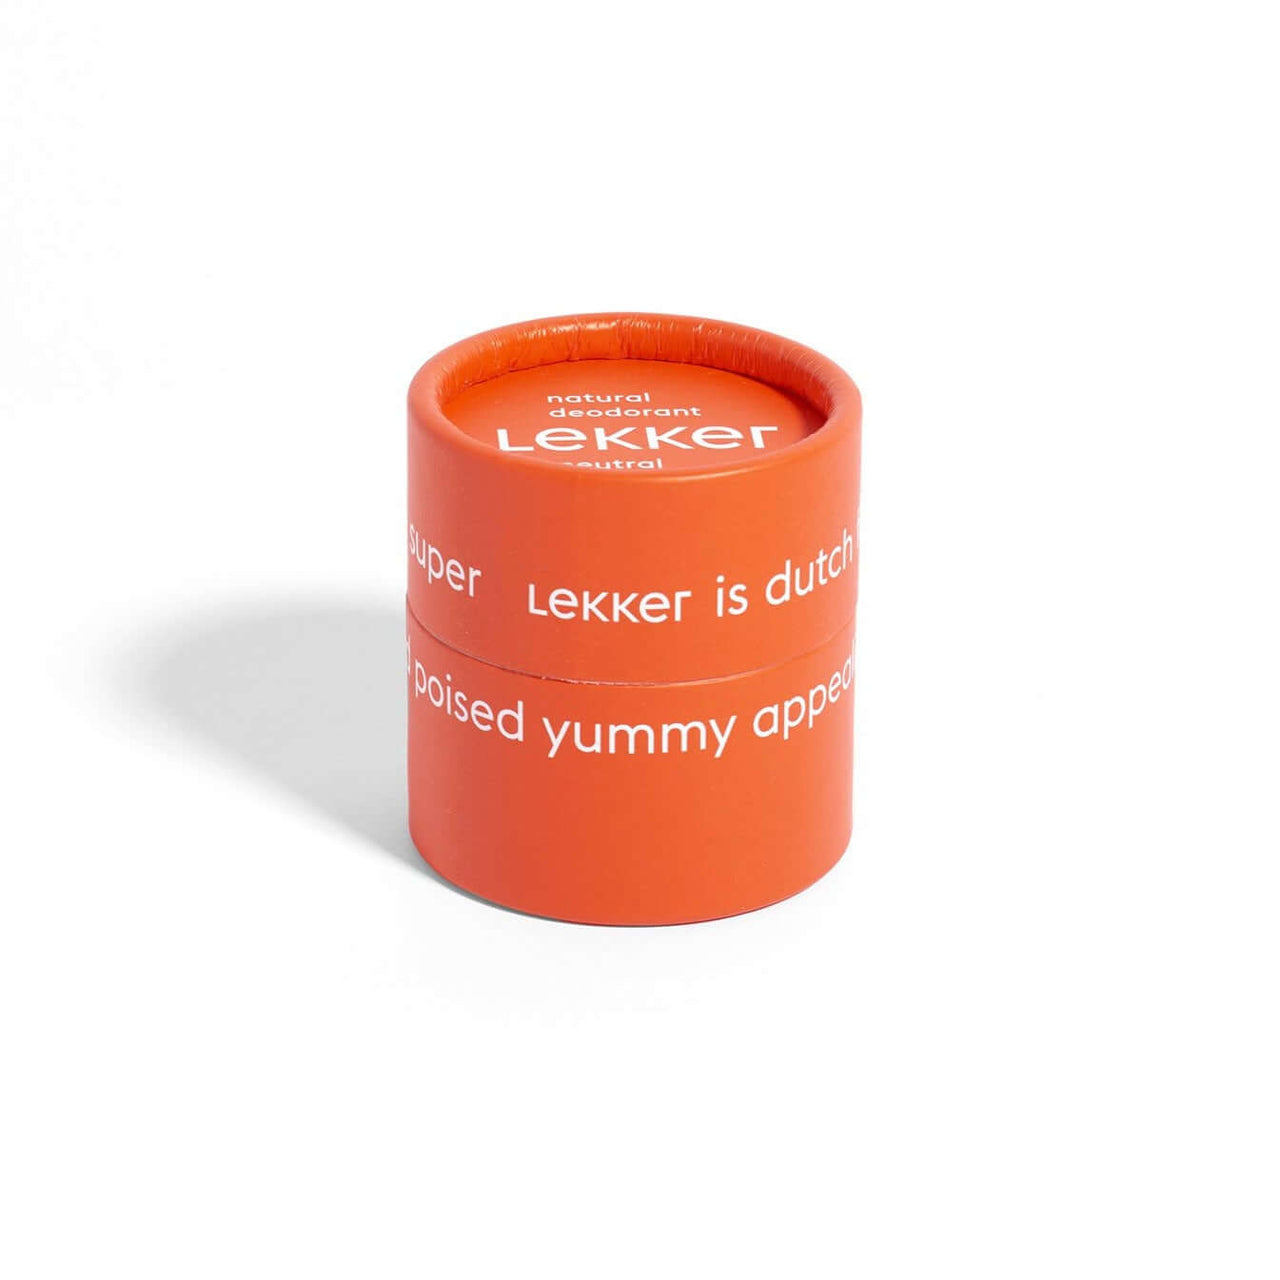 The Lekker Company Natural Deodorant NEUTRAL